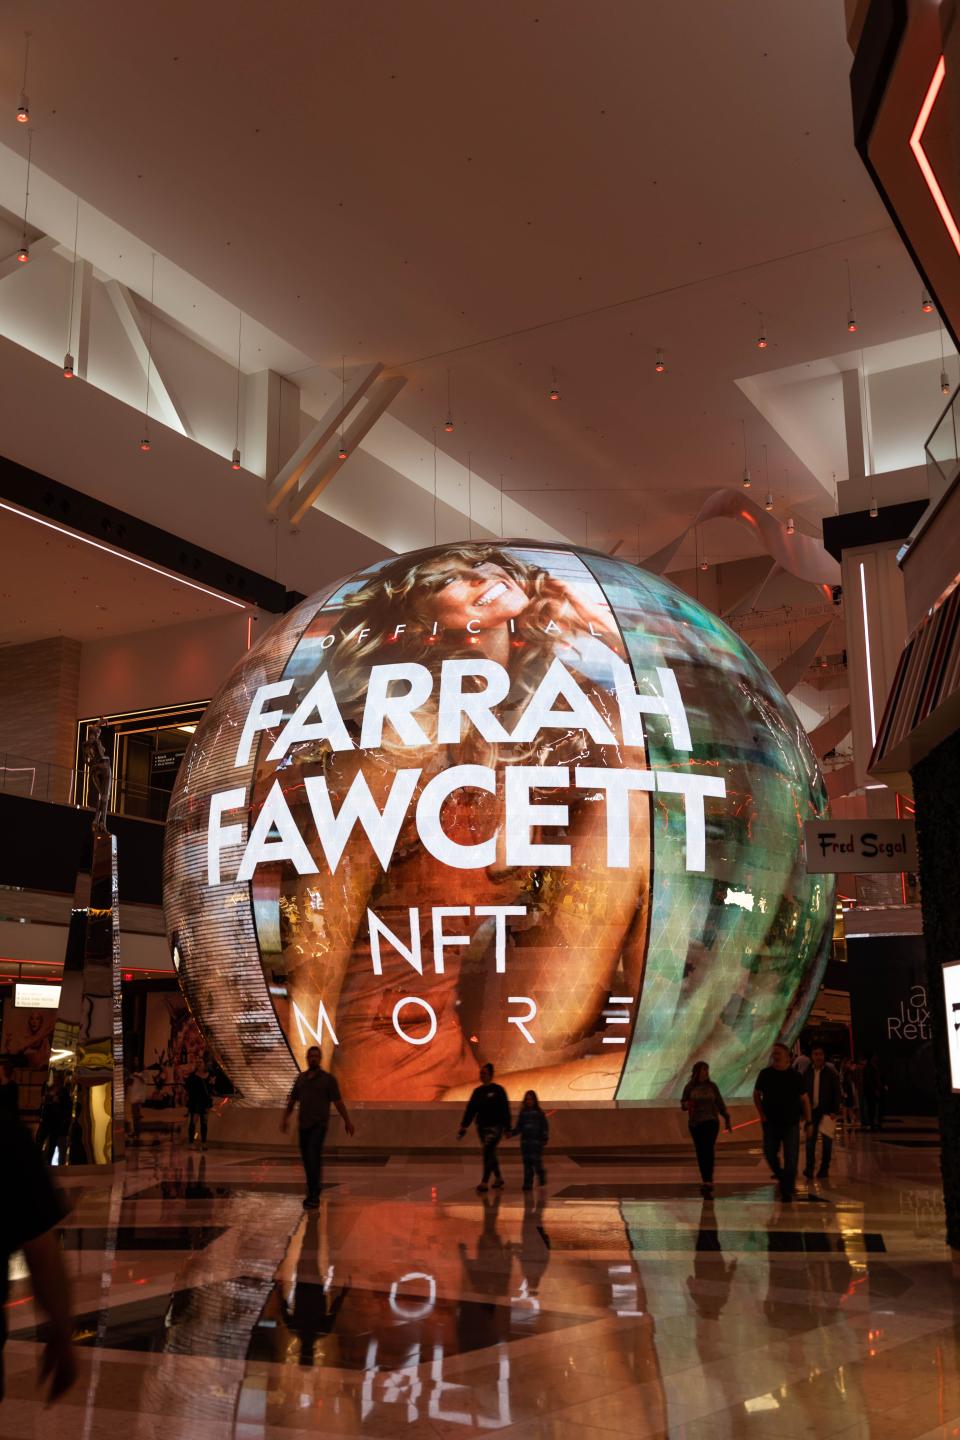 An NFT of Farrah Fawcett on display at Resorts World Las Vegas.